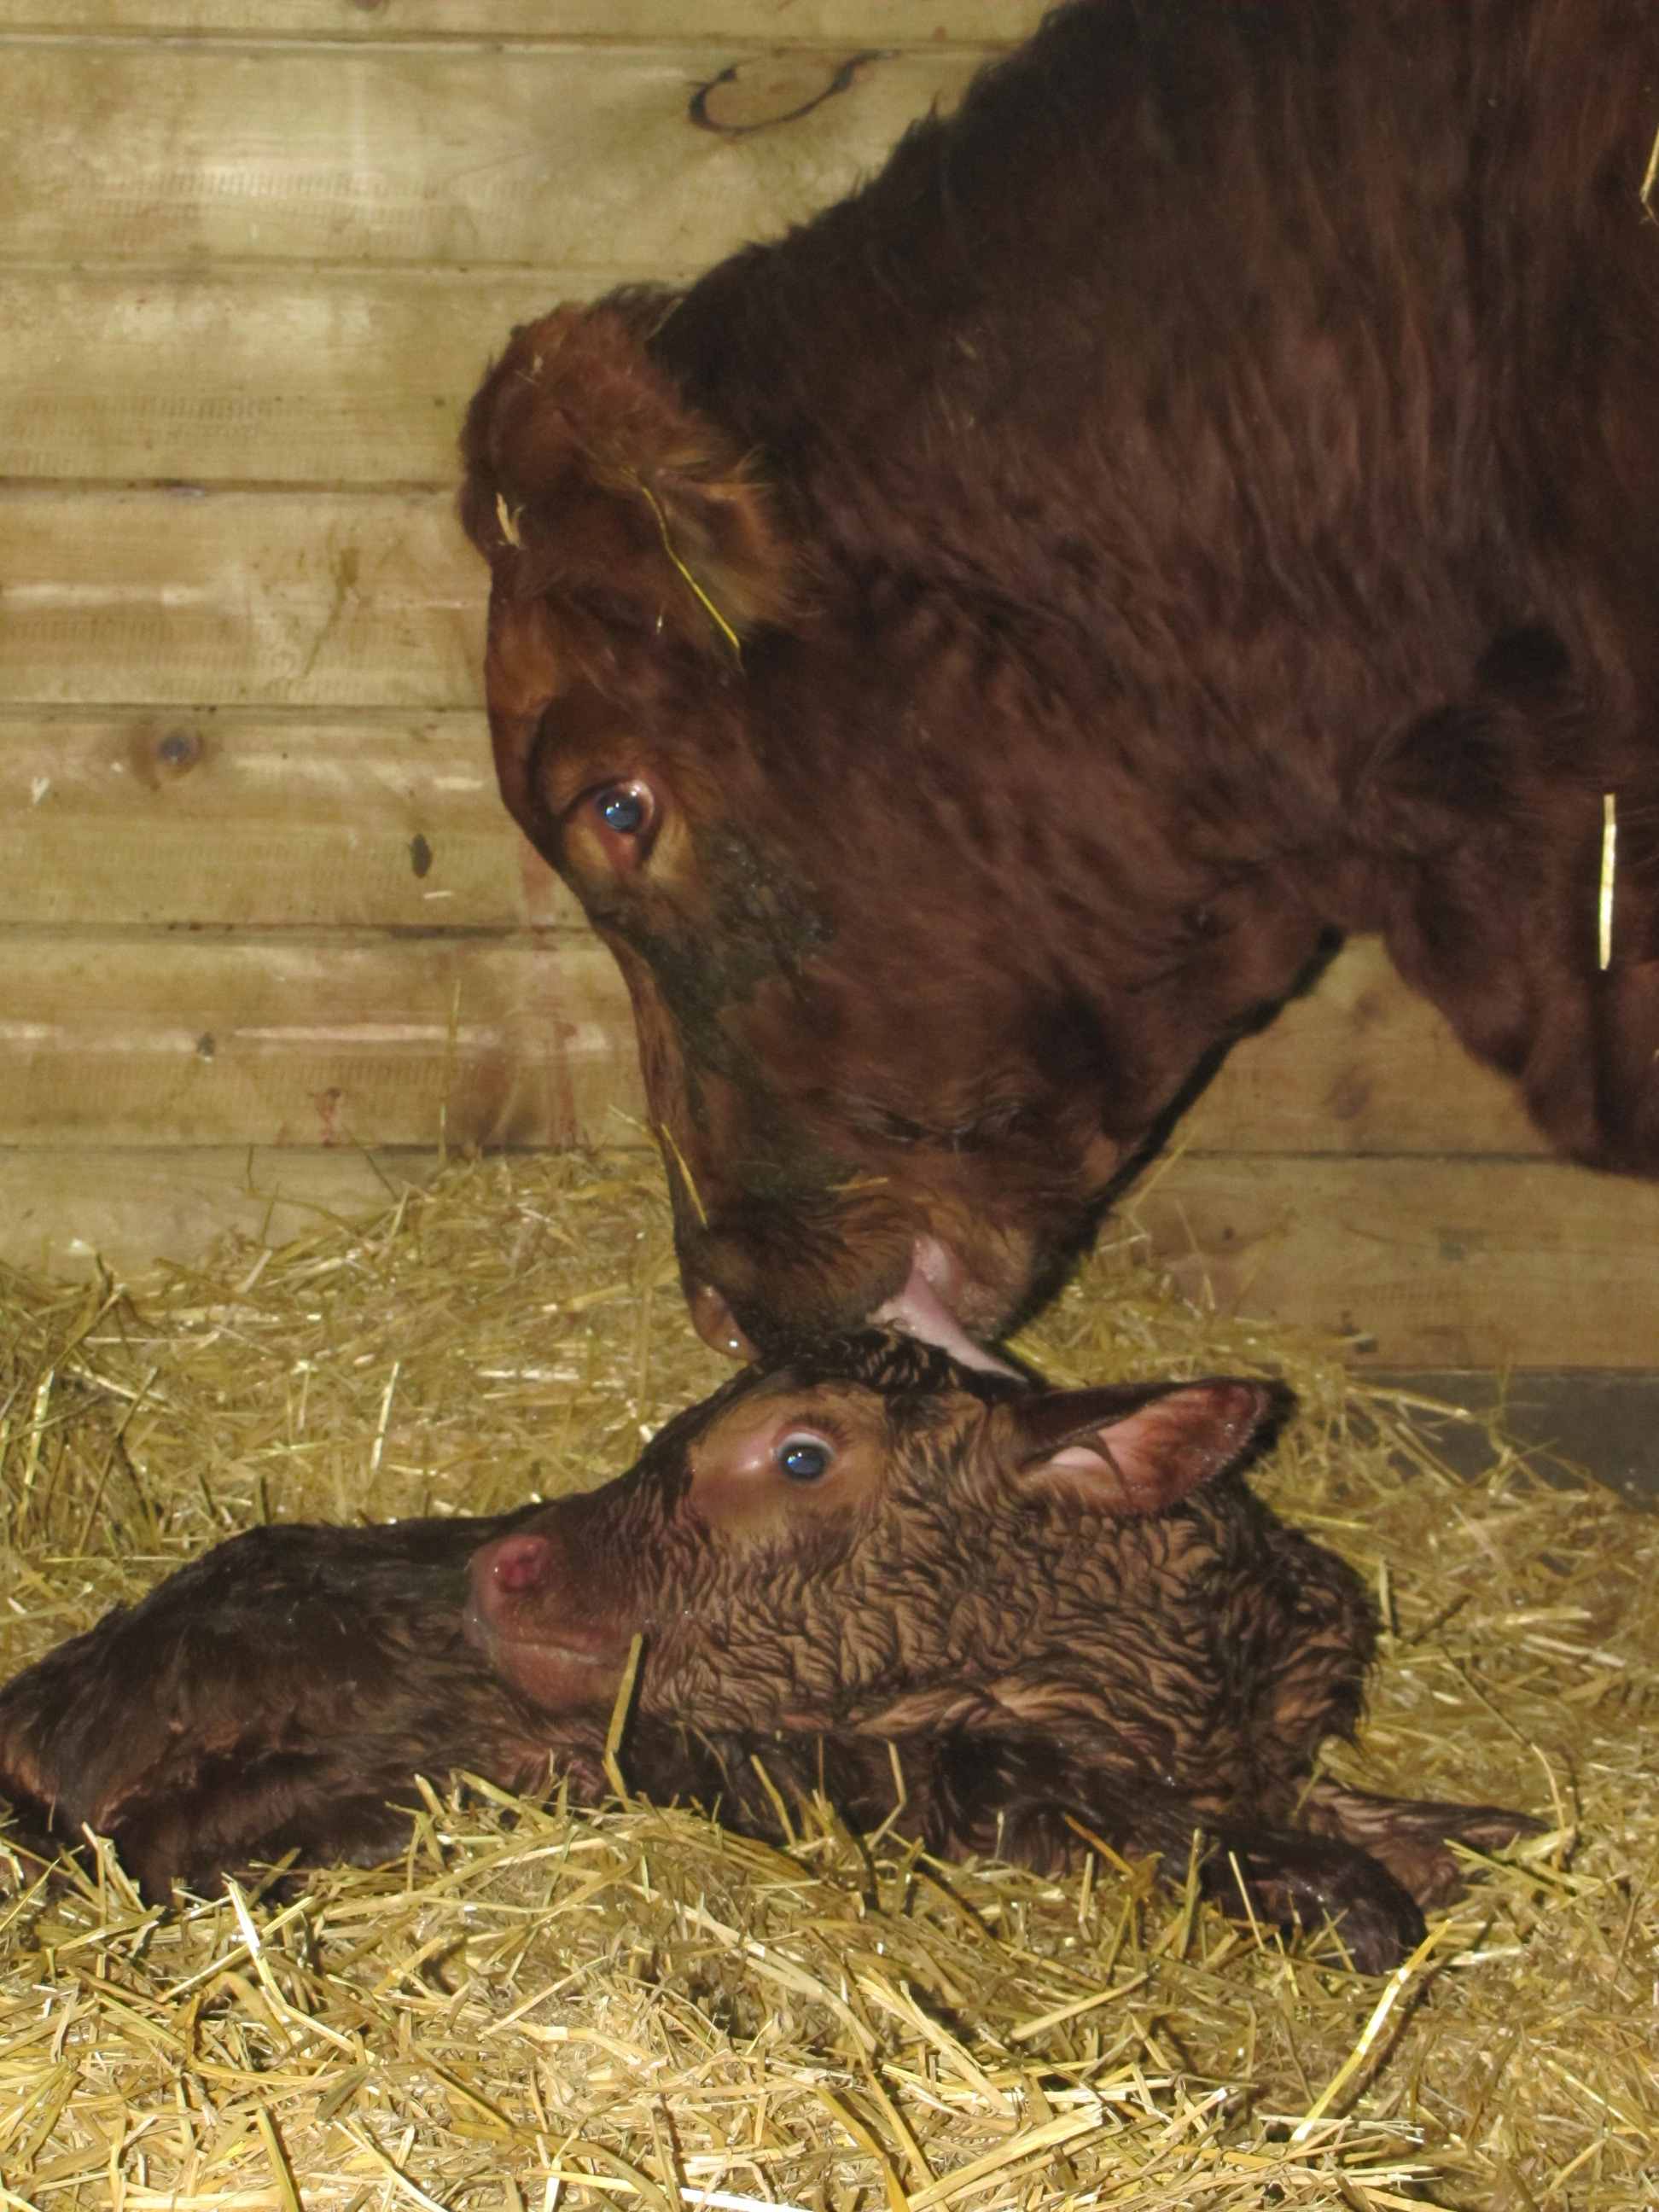 A cow licks its newborn calf at NDSU's main beef facility near campus.